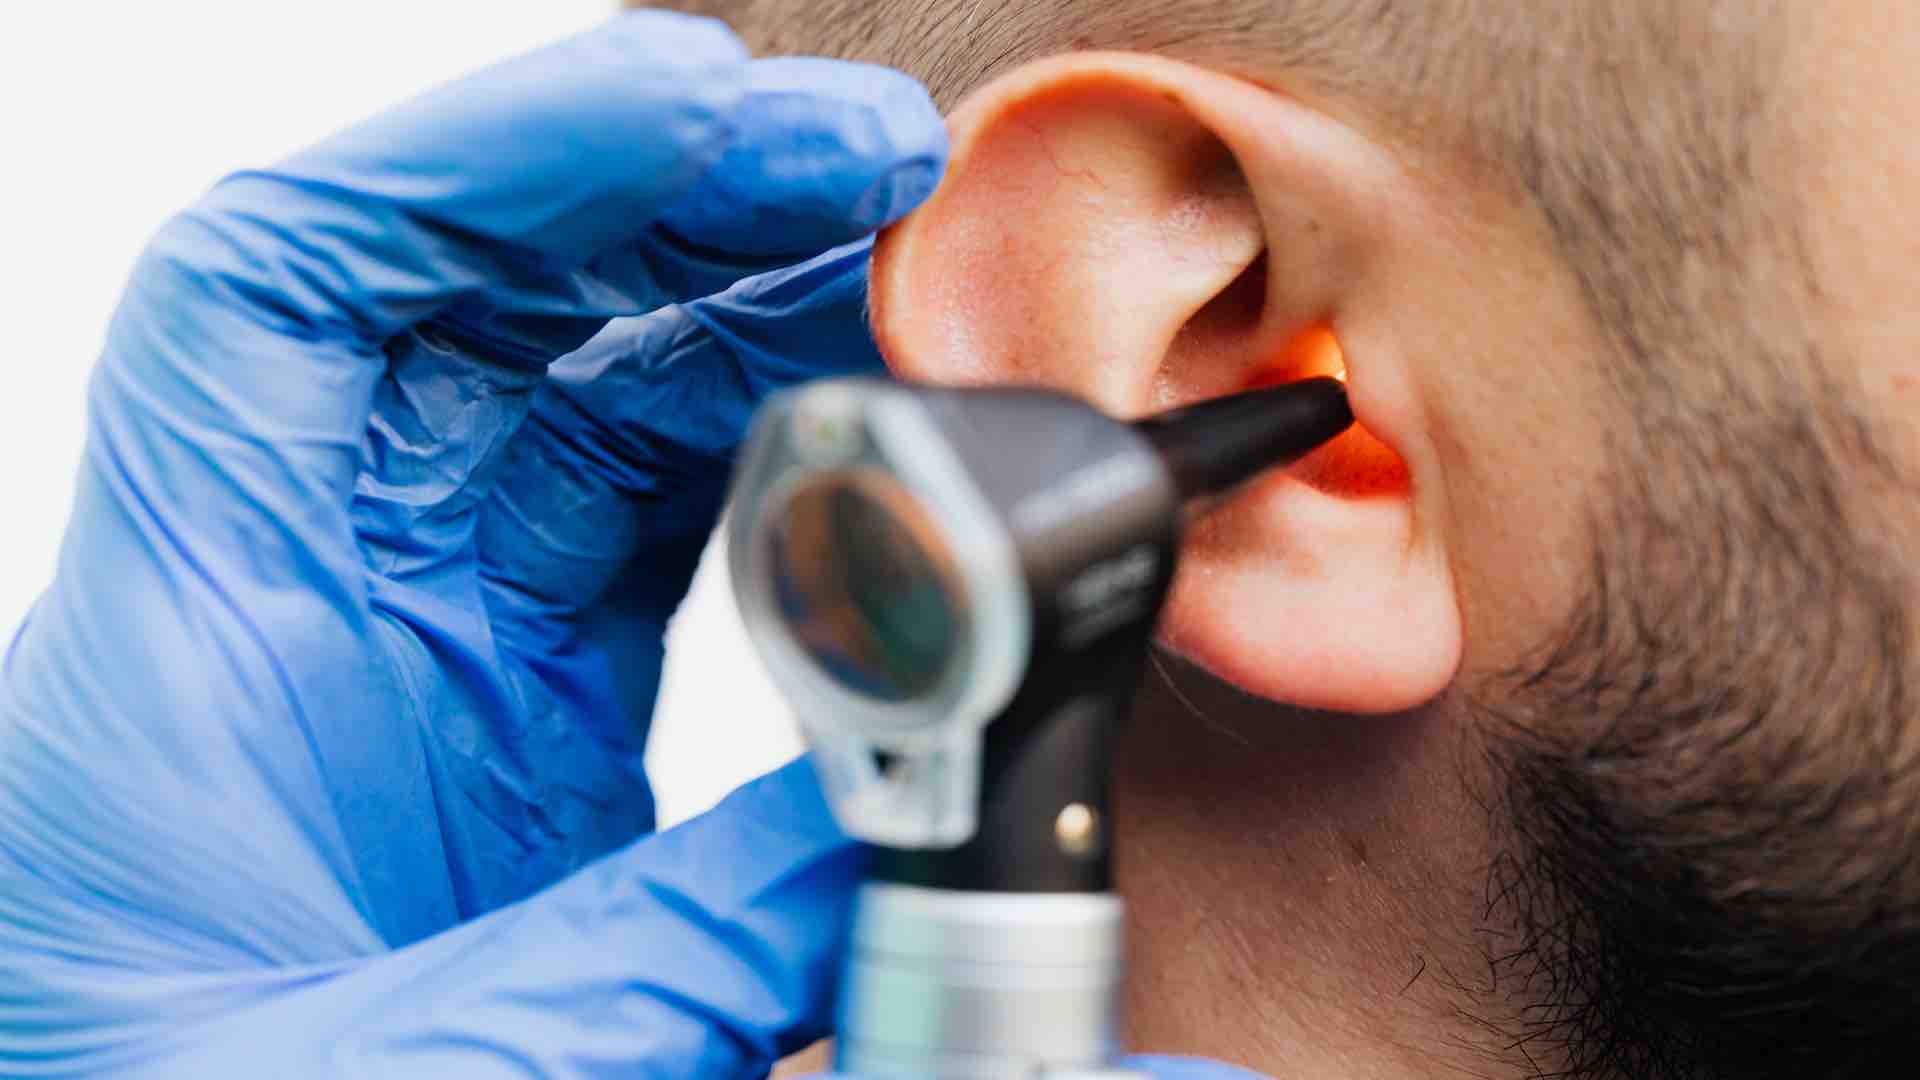 Doctor examining an ear